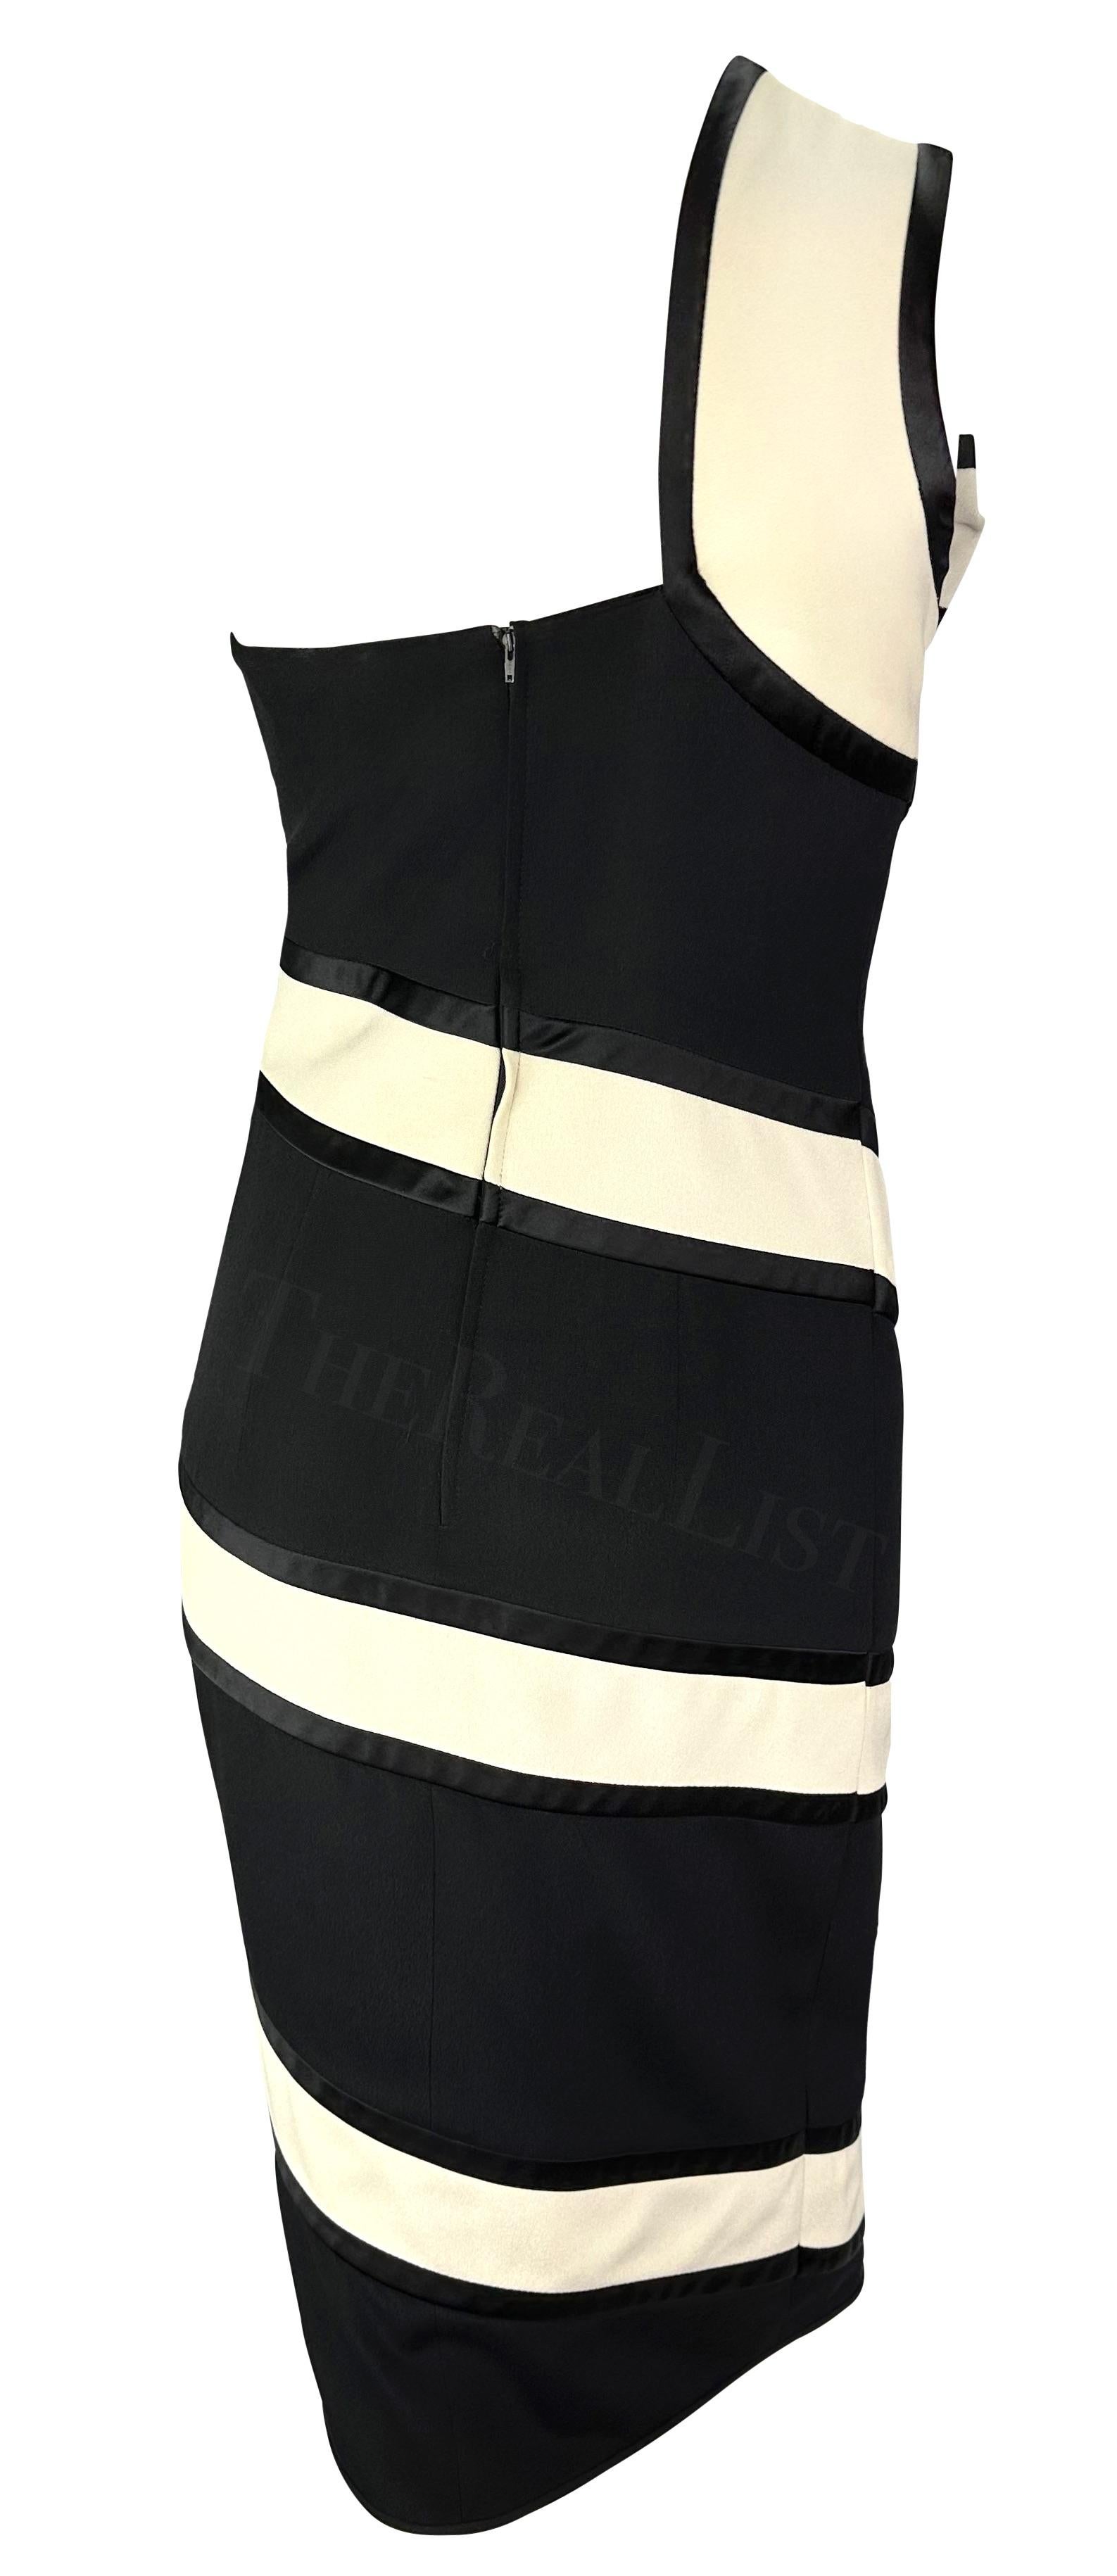 S/S 1993 Valentino Garavani Runway Black White Stripe Bow Dress For Sale 1